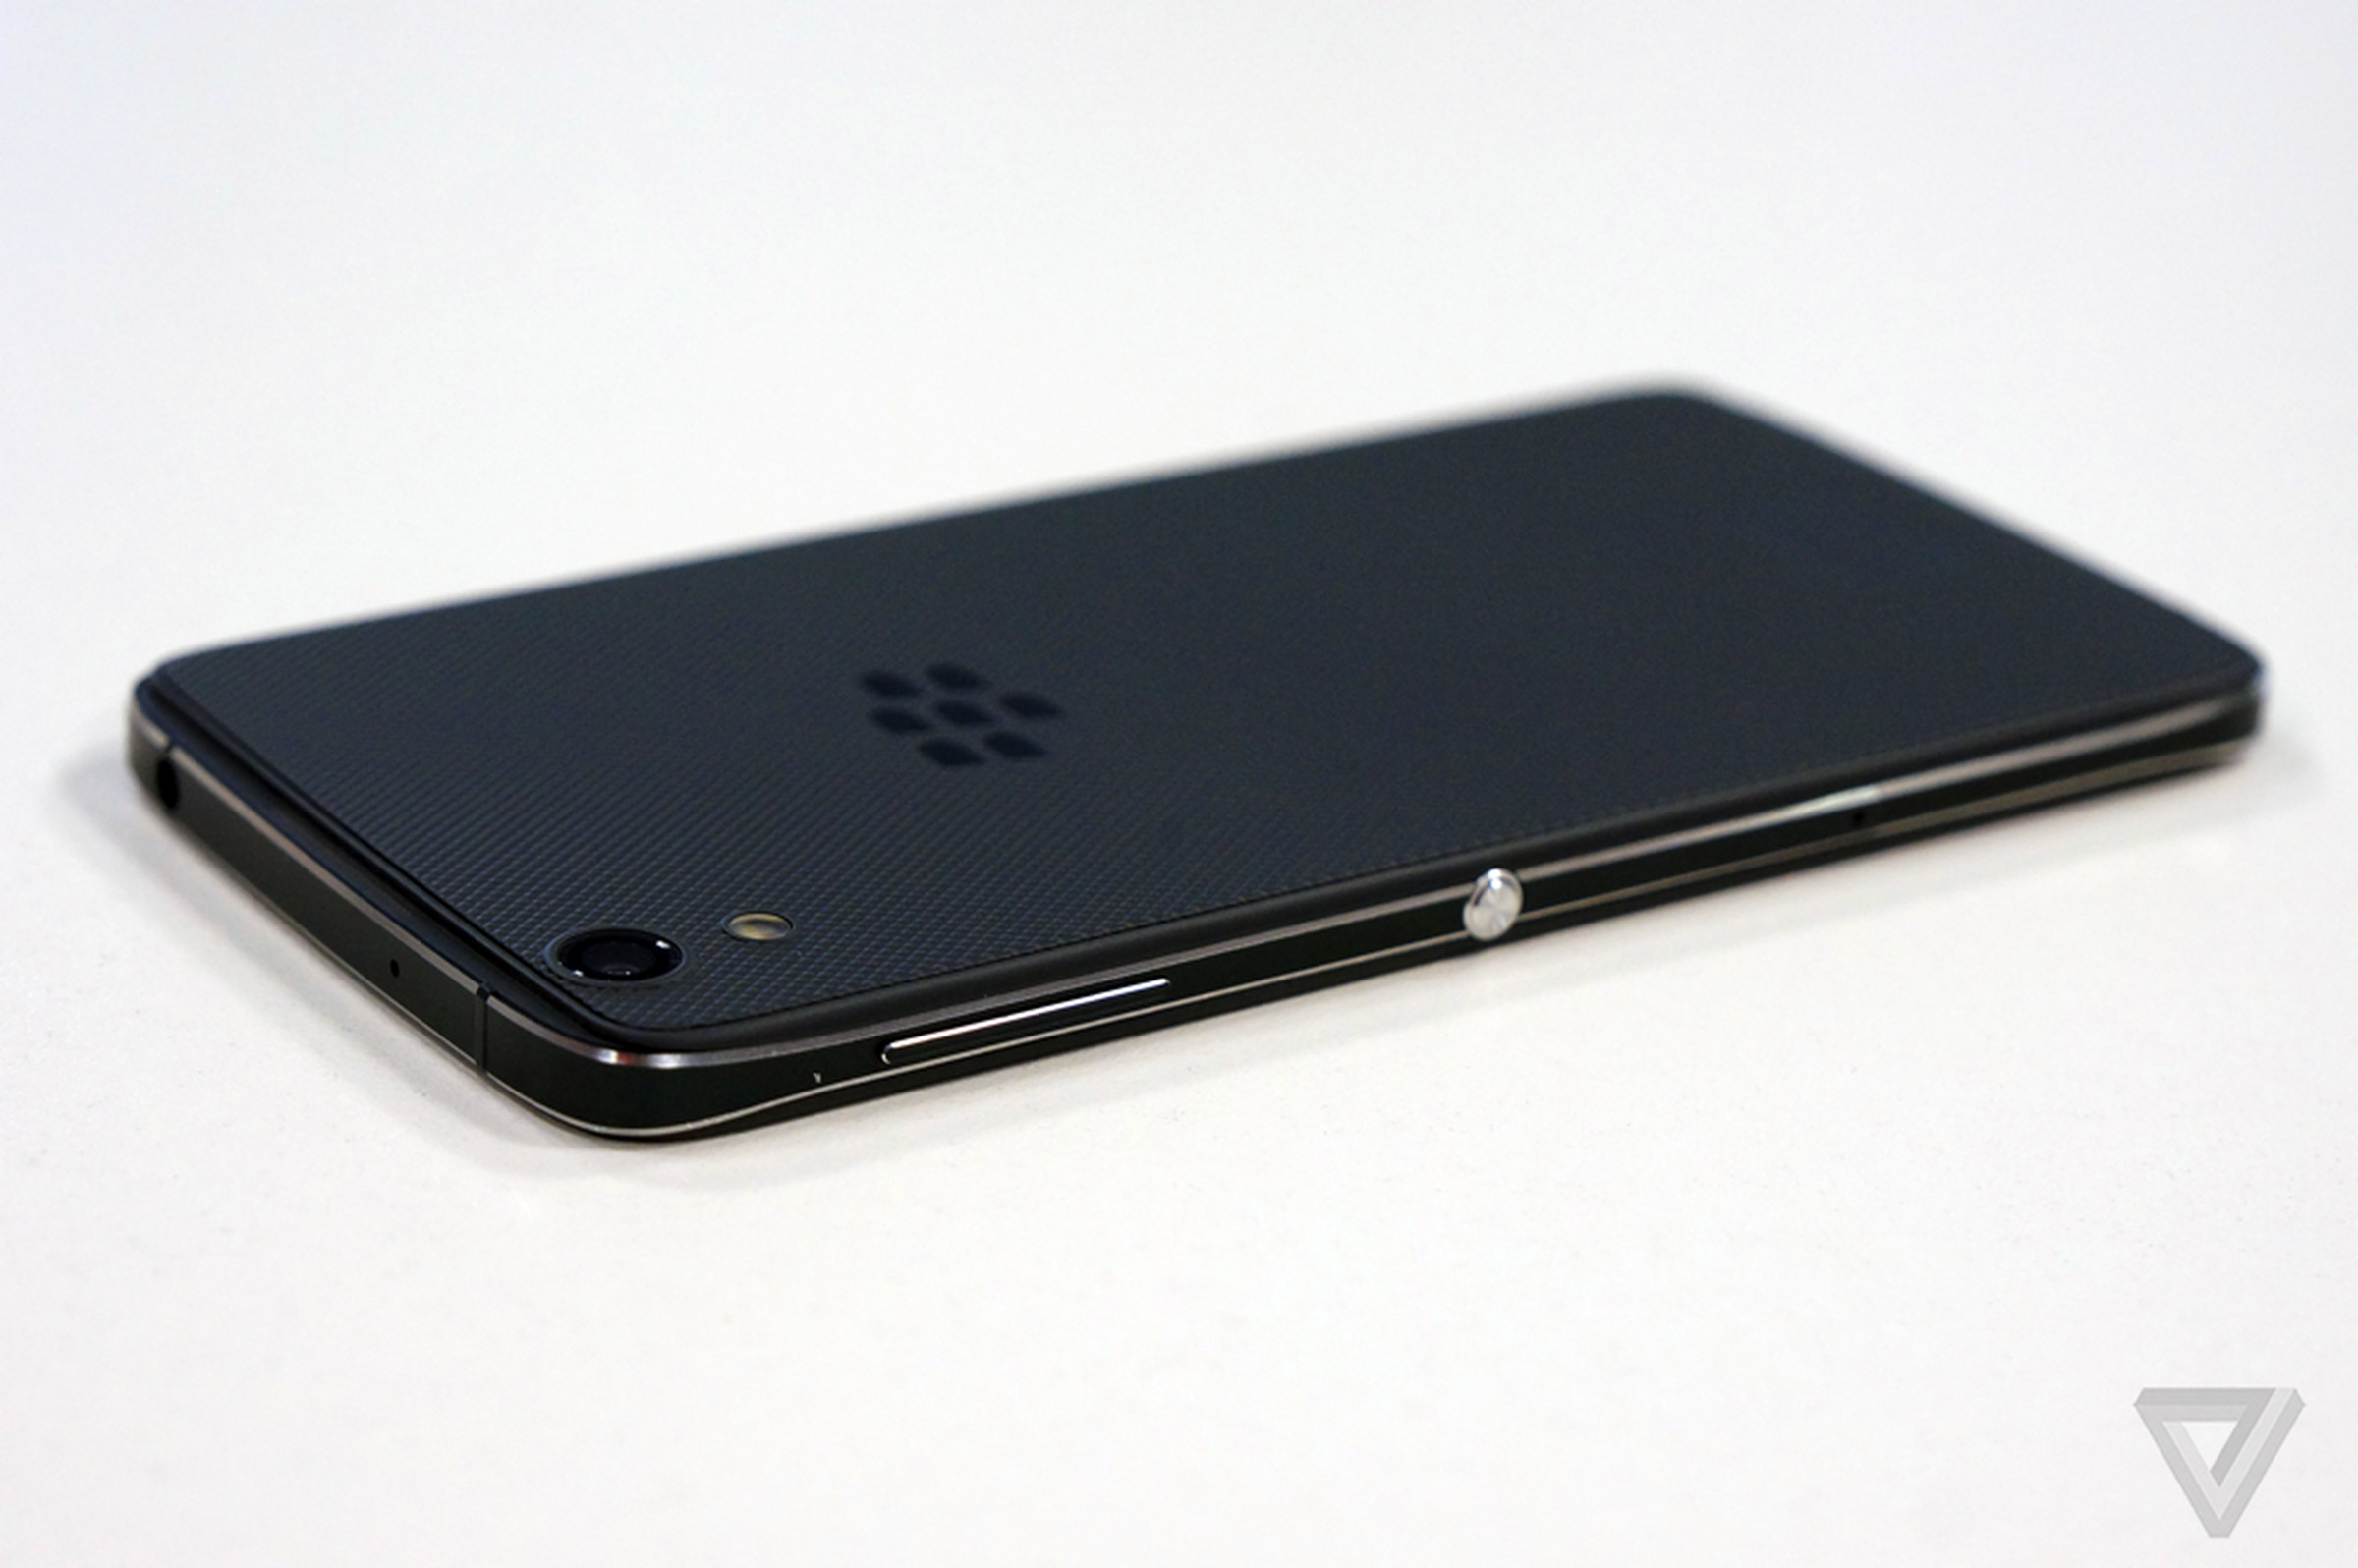 Blackberry DTEK50 hands-on gallery